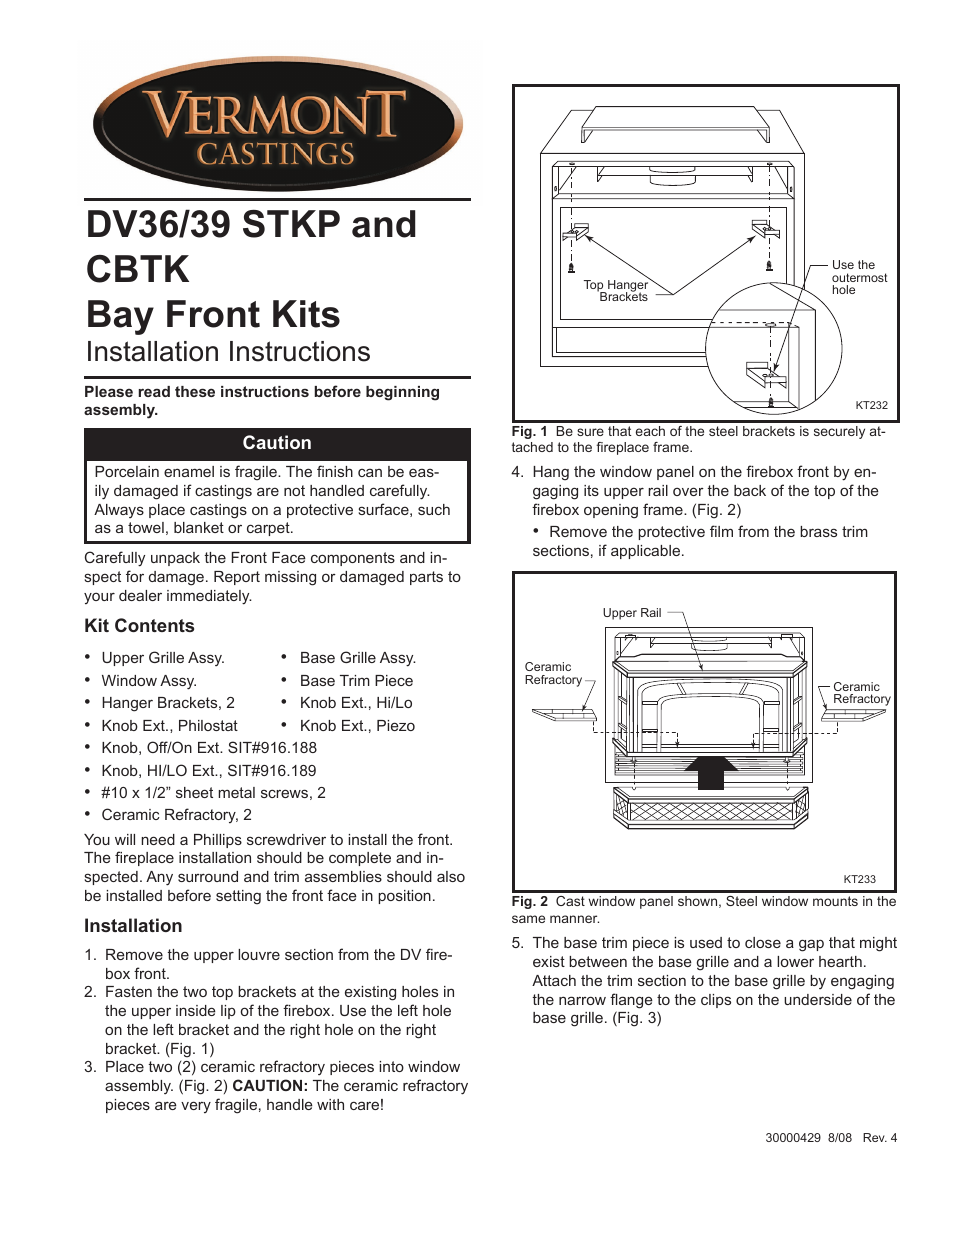 Bay Front Kits DV36/39